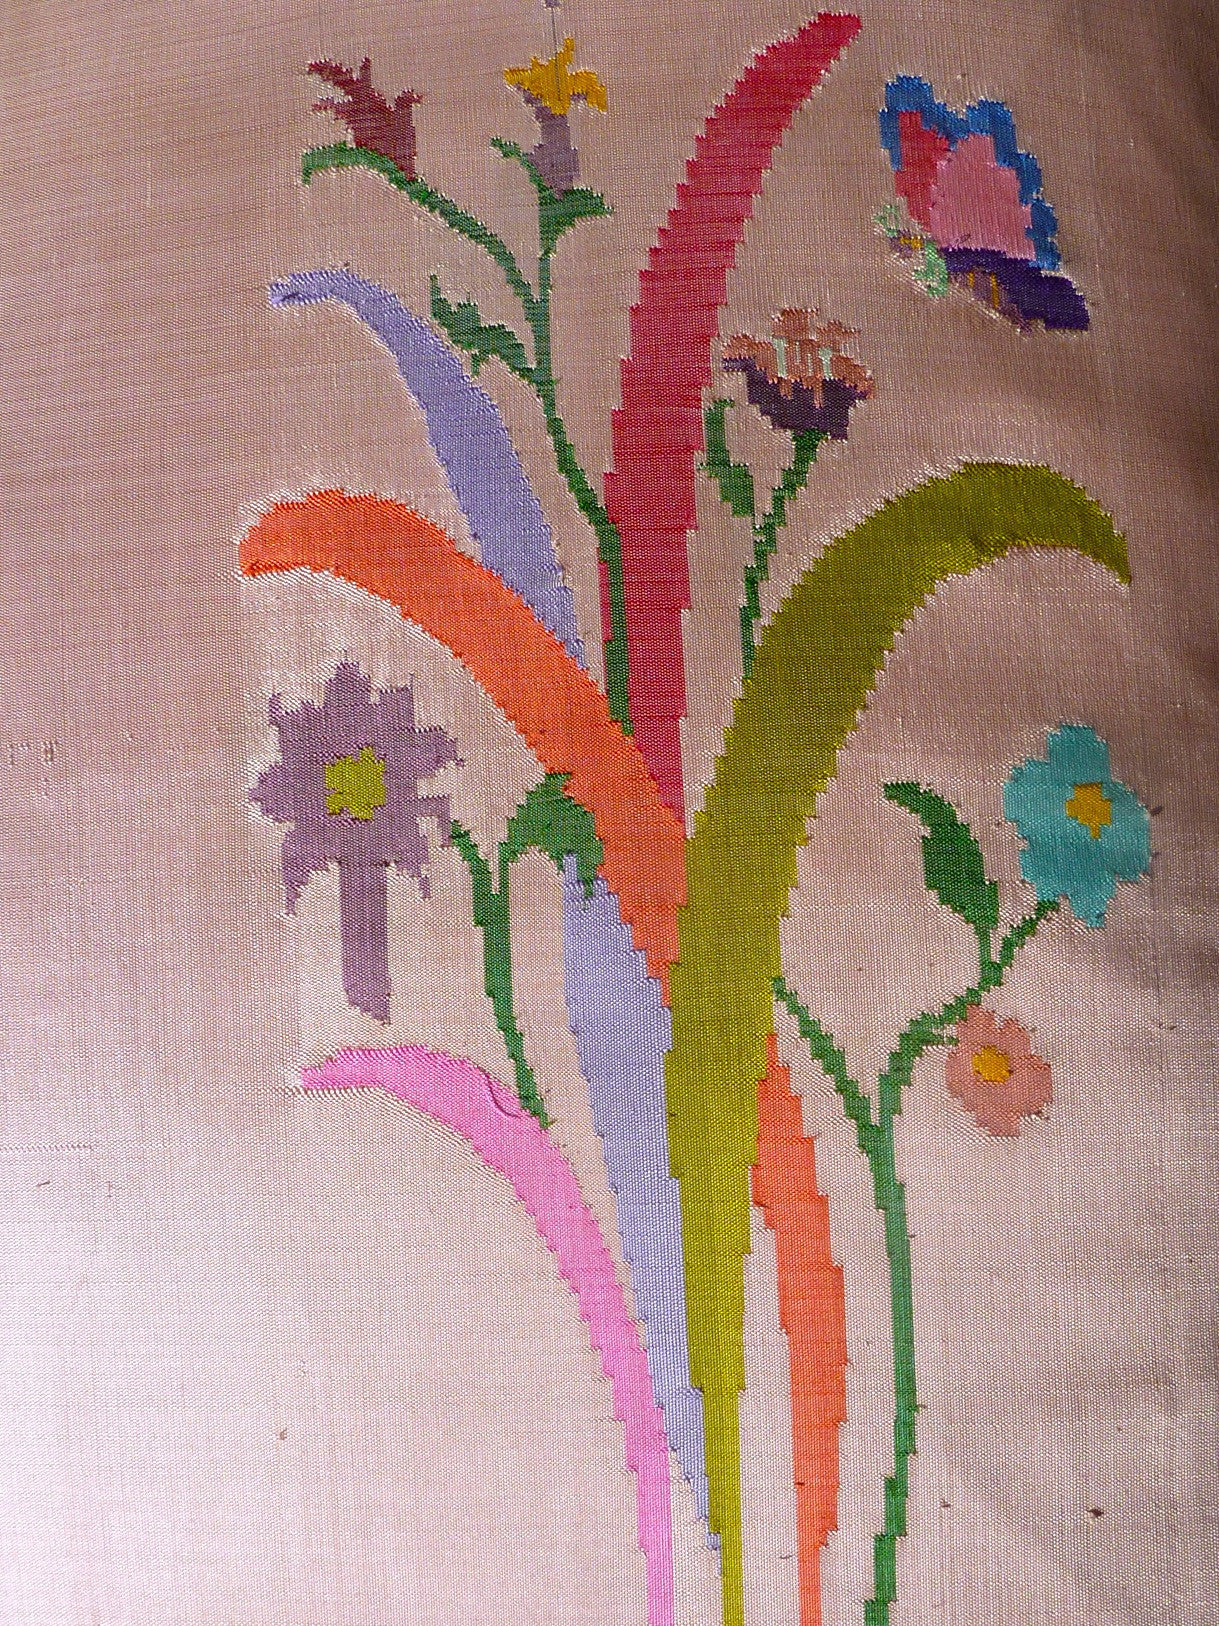 Burmese Silk 30" Euro Or Floor Pillows Pink Floral